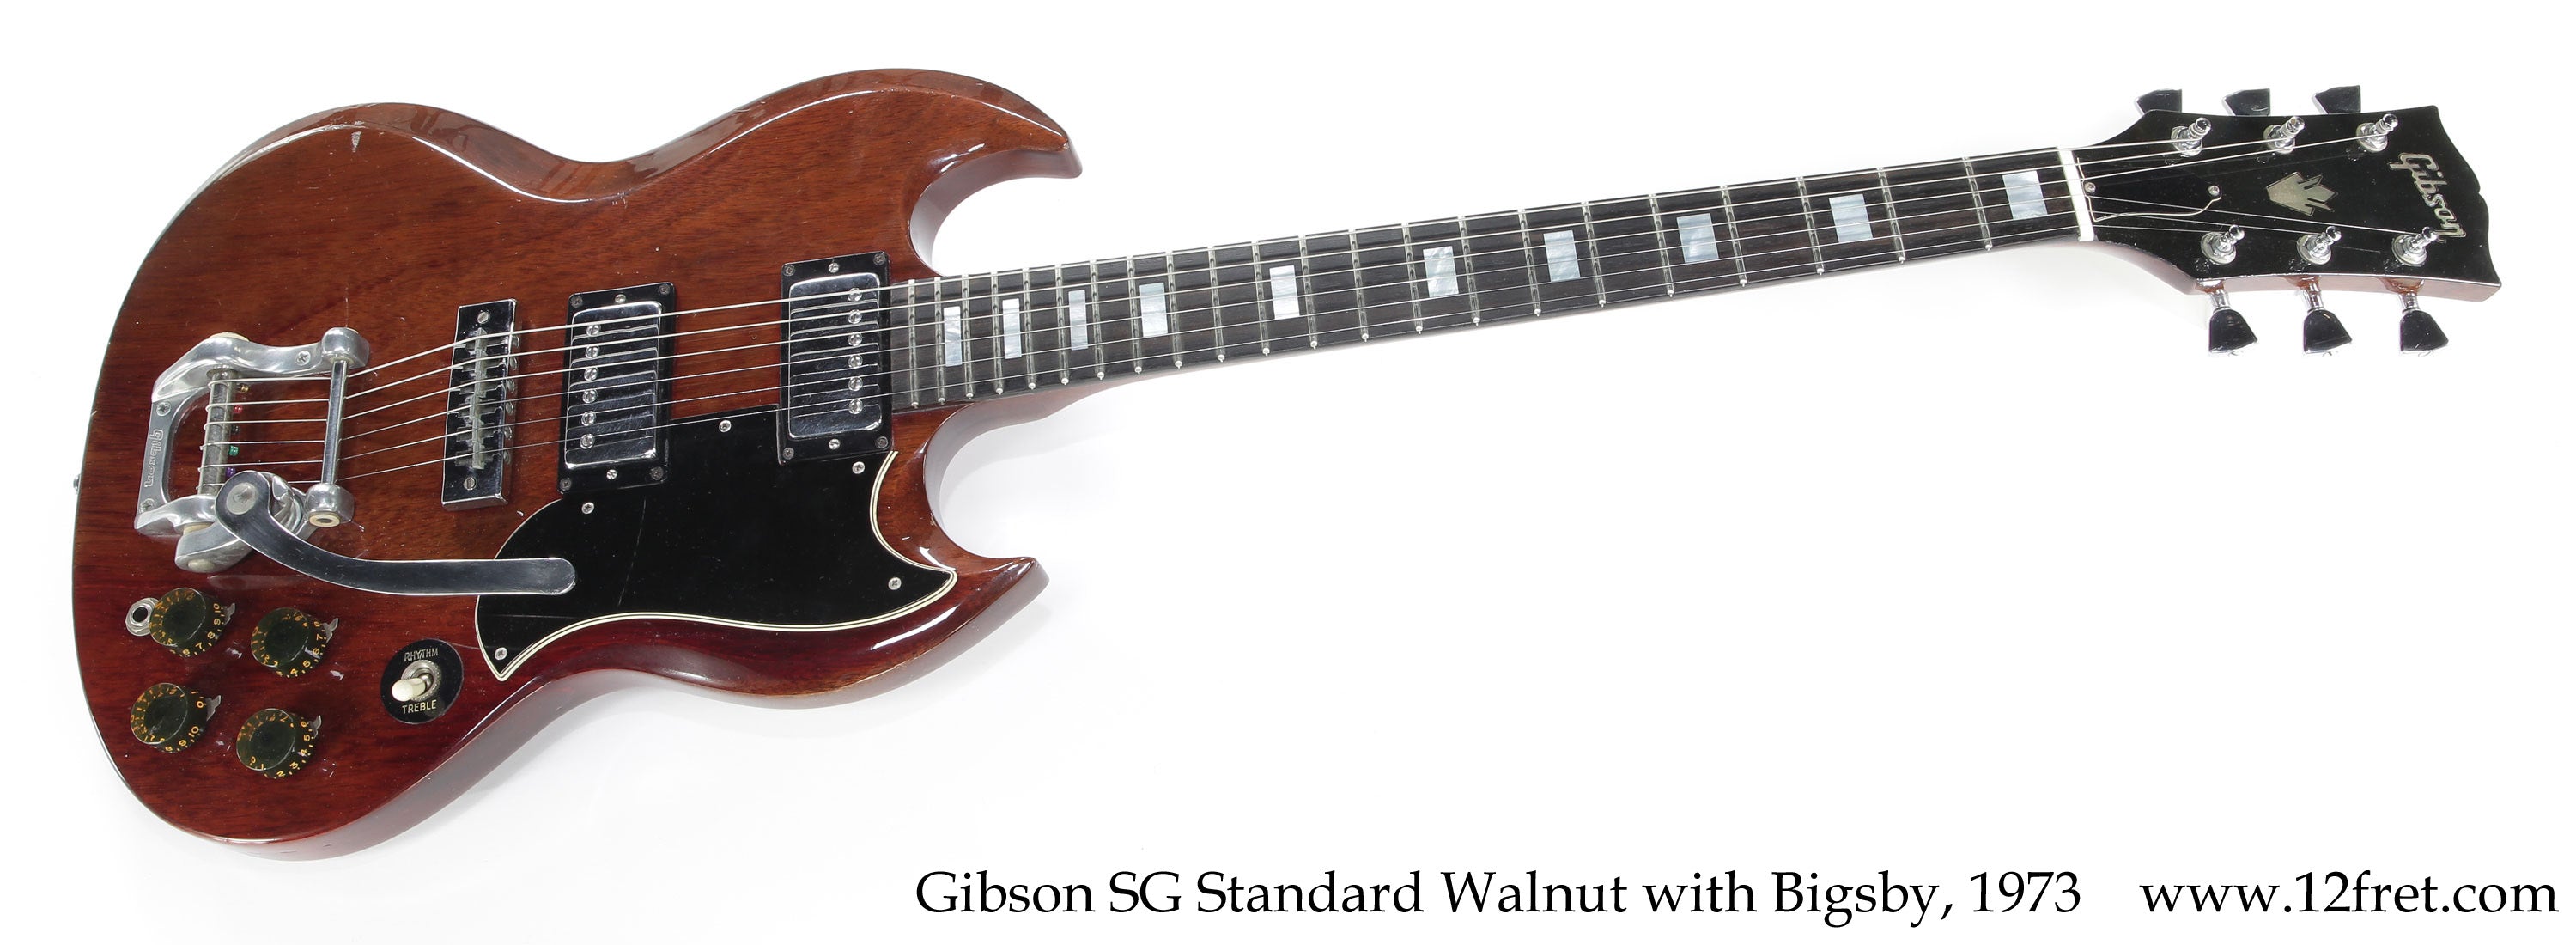 Gibson SG Standard Walnut with Bigsby, 1973 - The Twelfth Fret